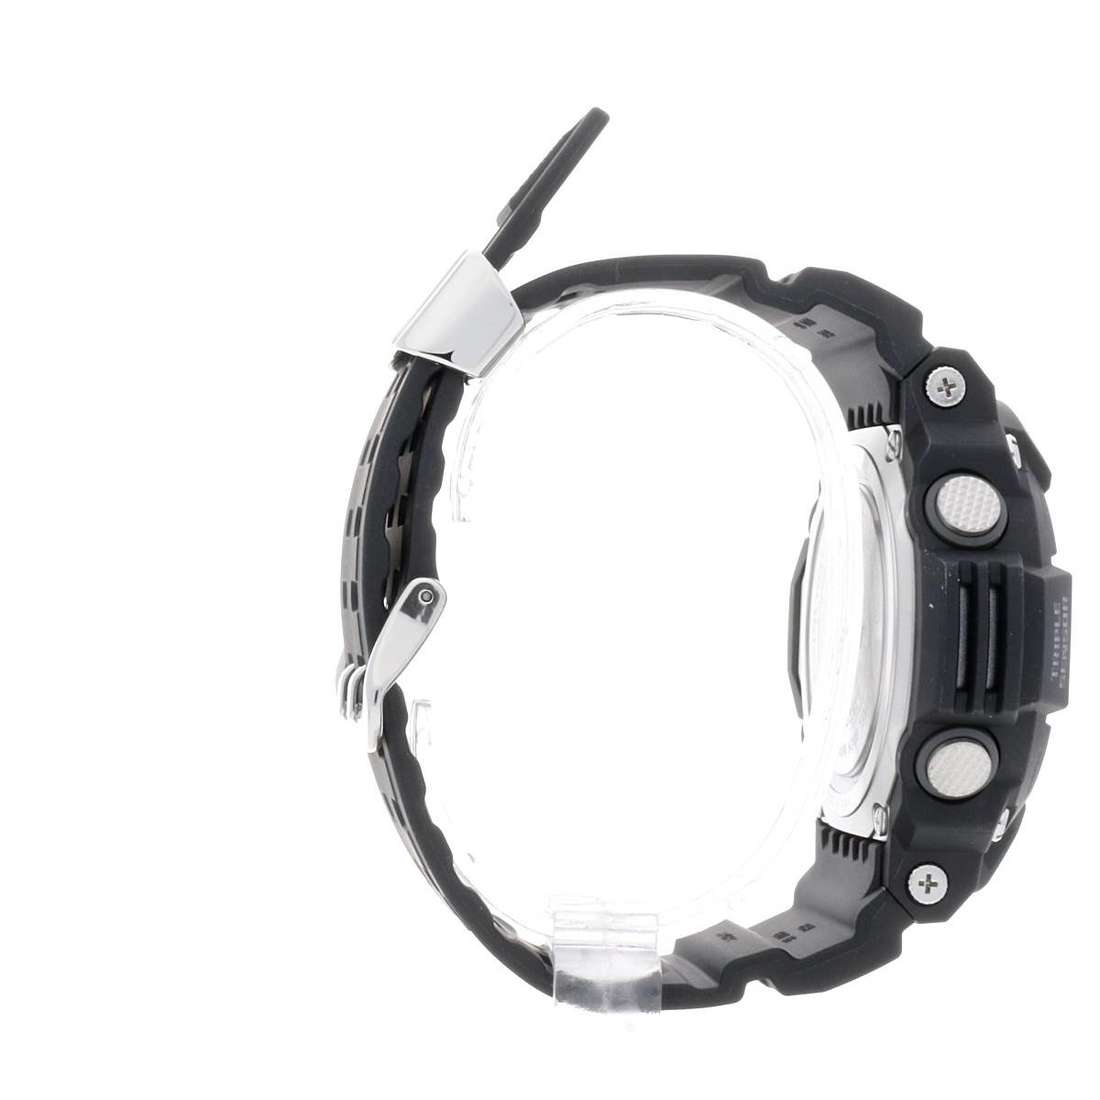 Buy watches man G-Shock GW-9400-1ER